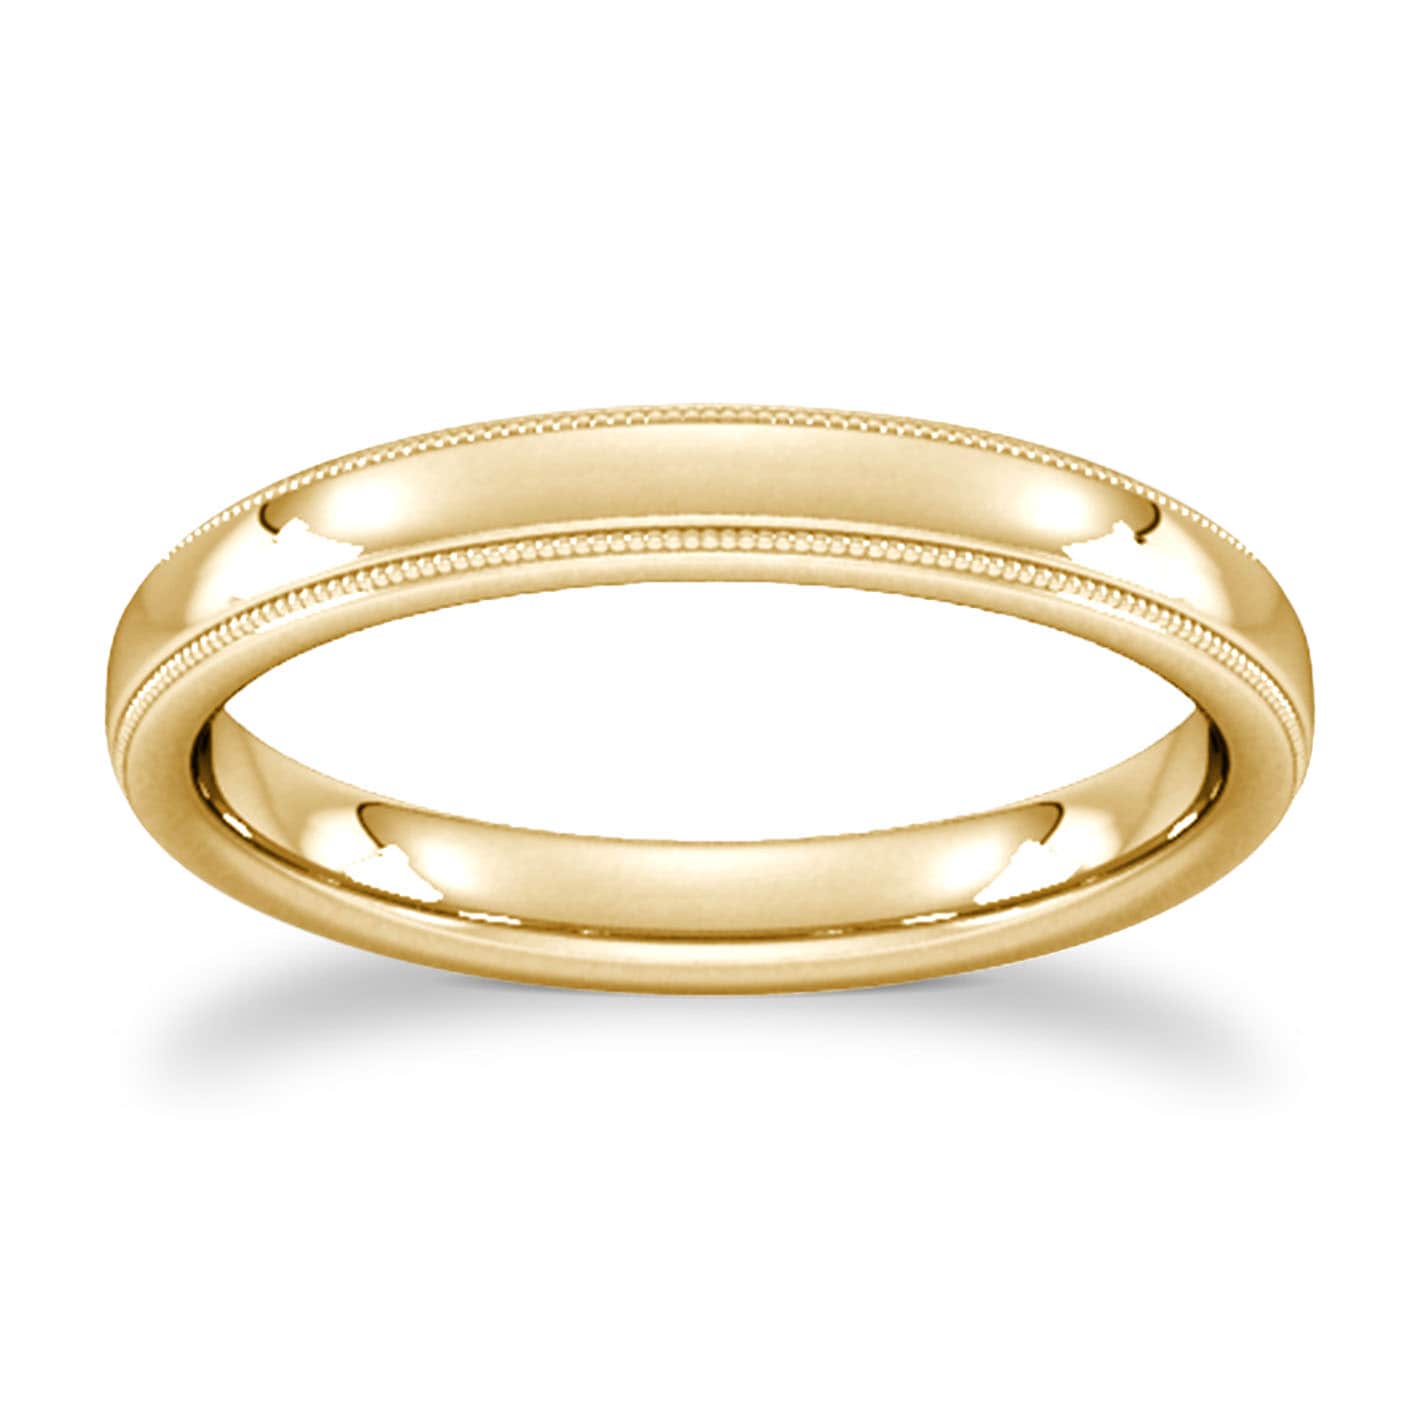 3mm D Shape Standard Milgrain Edge Wedding Ring In 18 Carat Yellow Gold - Ring Size M